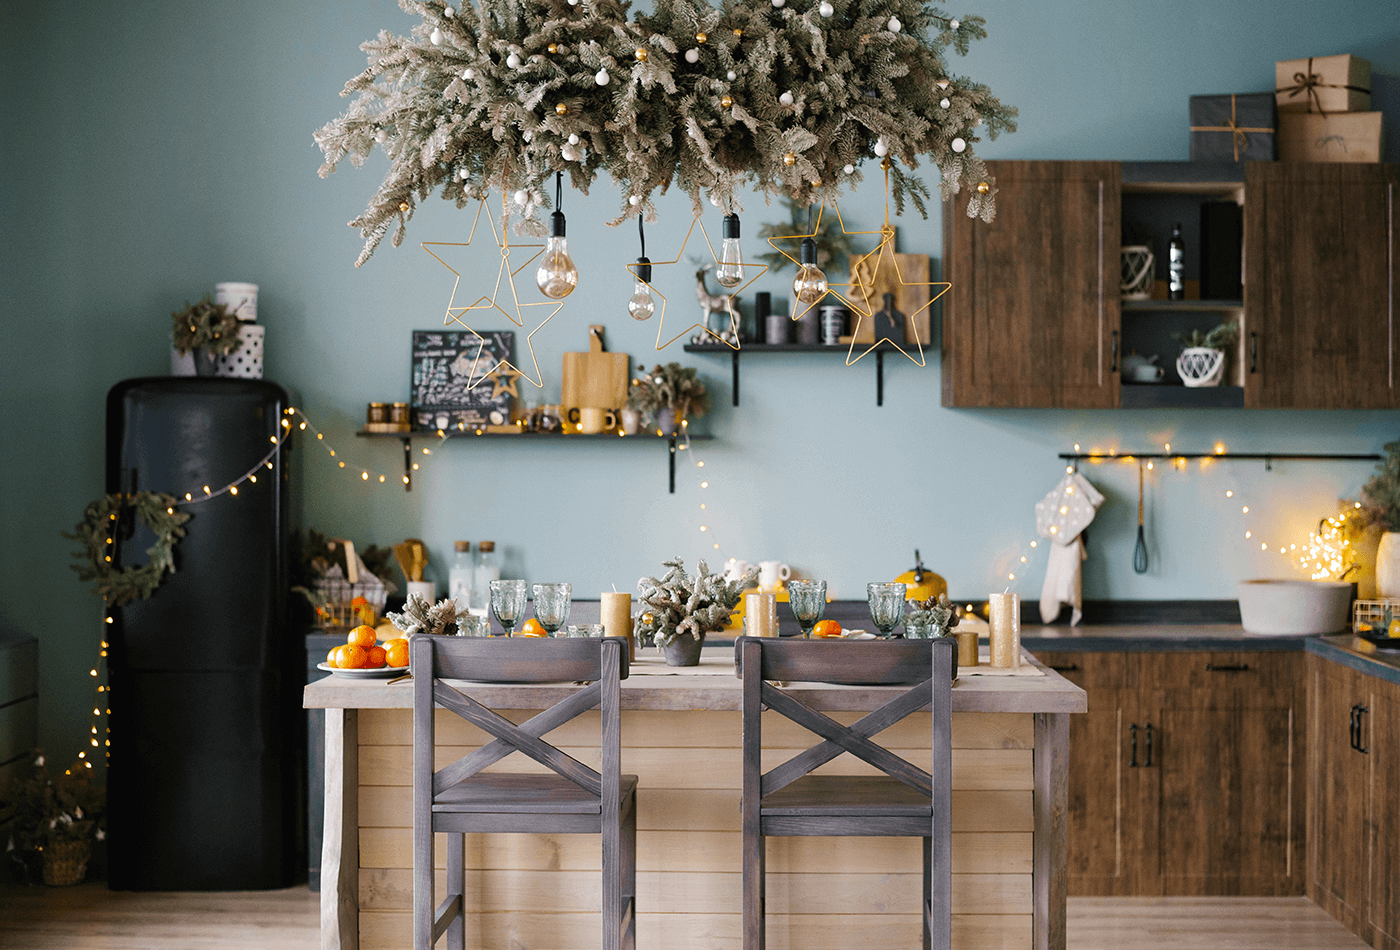 Christmas Kitchen Decor - It's a Blue, Blue Christmas!